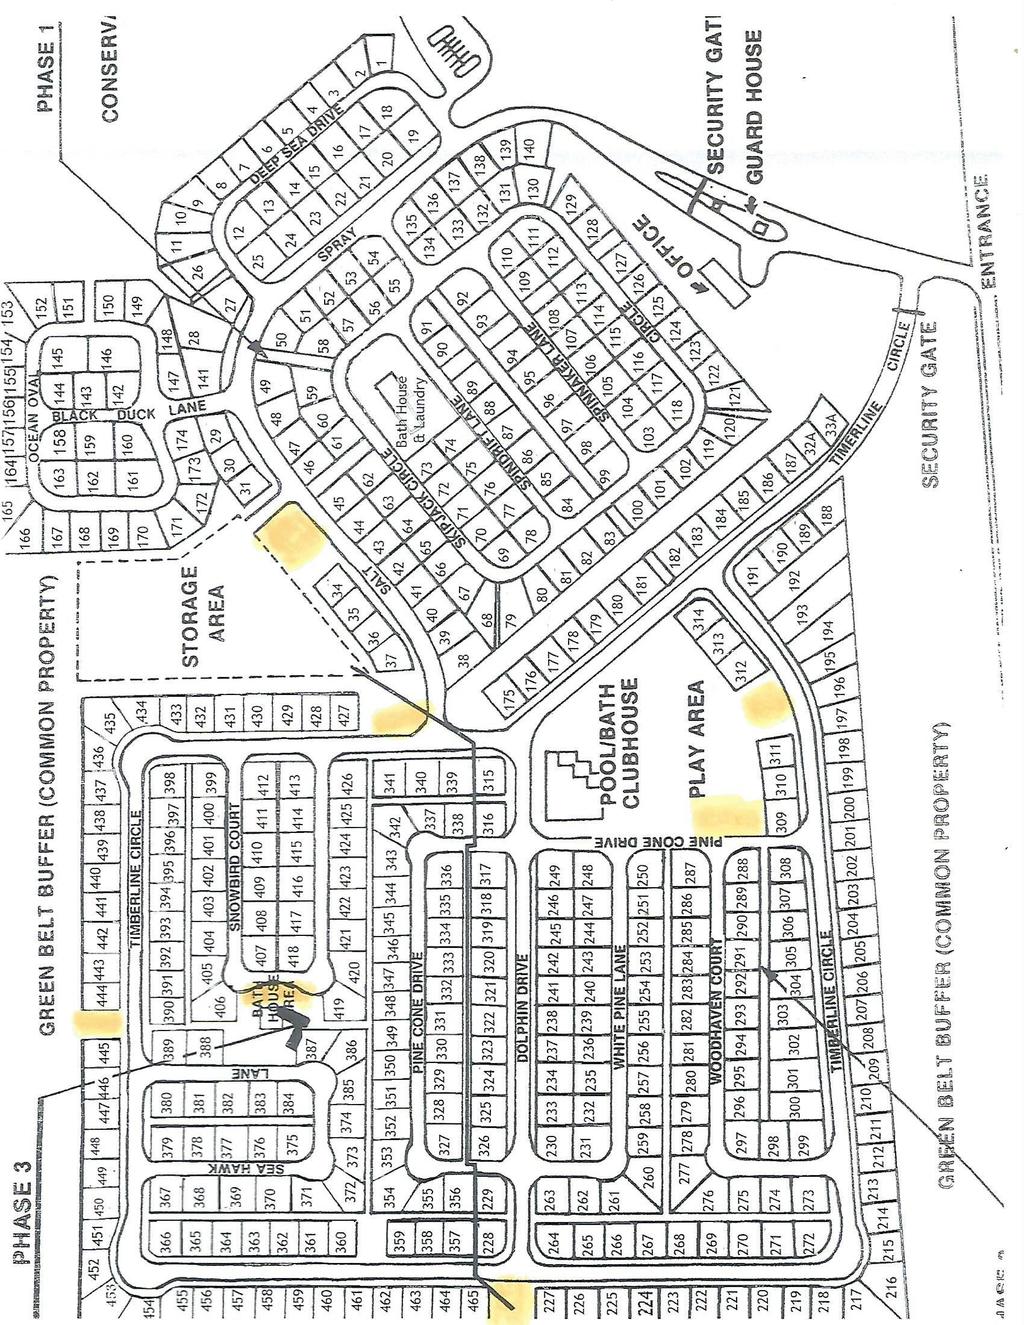 Highlighted Areas Designate